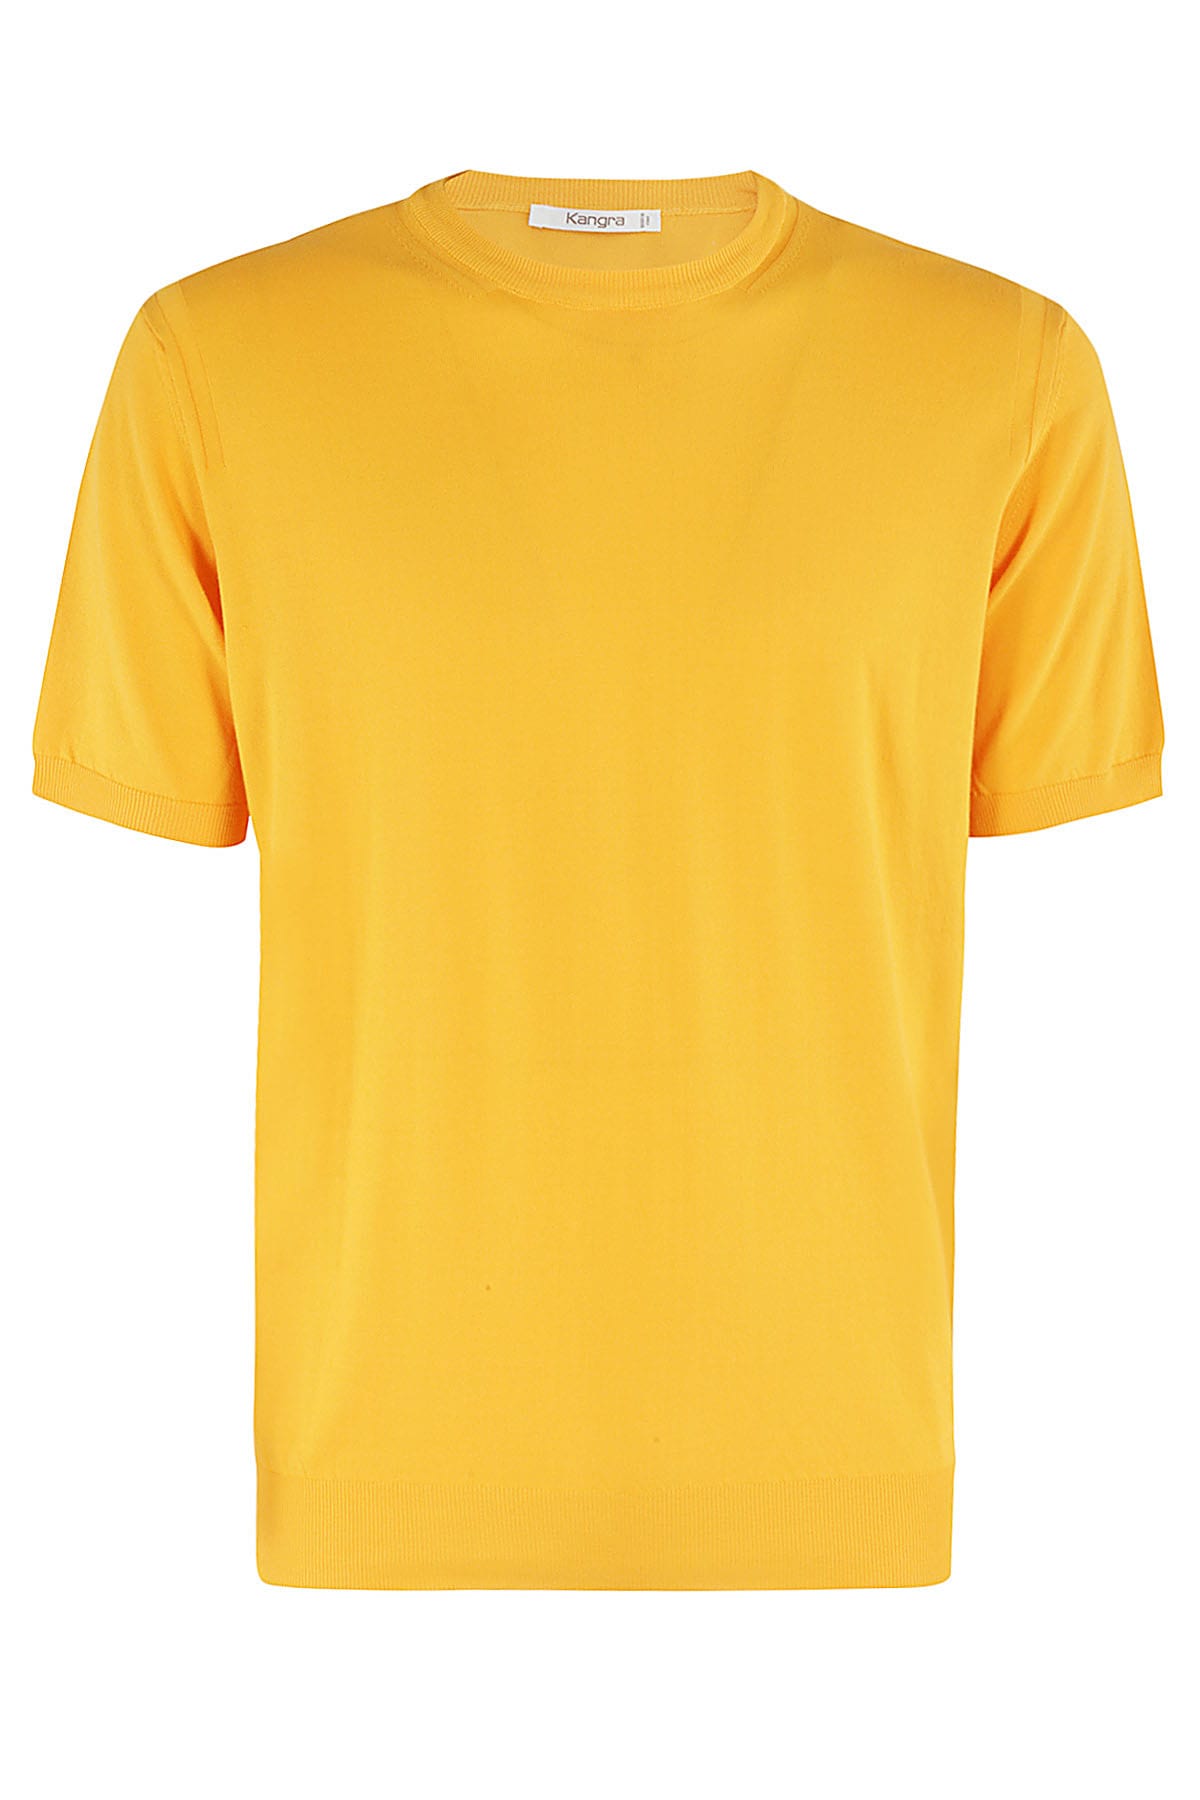 Kangra T Shirt In Zucca